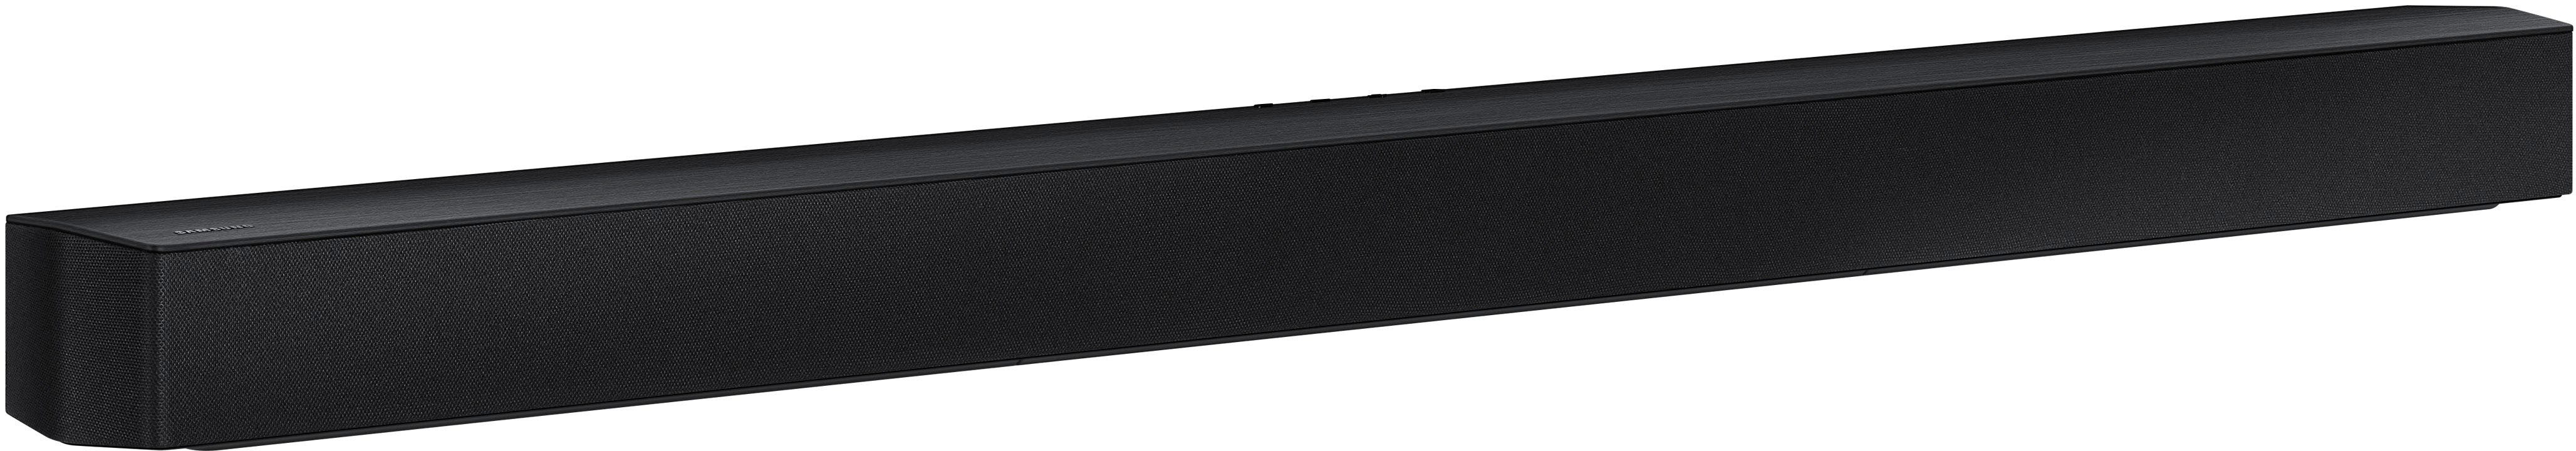 Samsung HW-B450/ZA 2.1ch Soundbar with DOLBY AUDIO/ DTS 2.0 